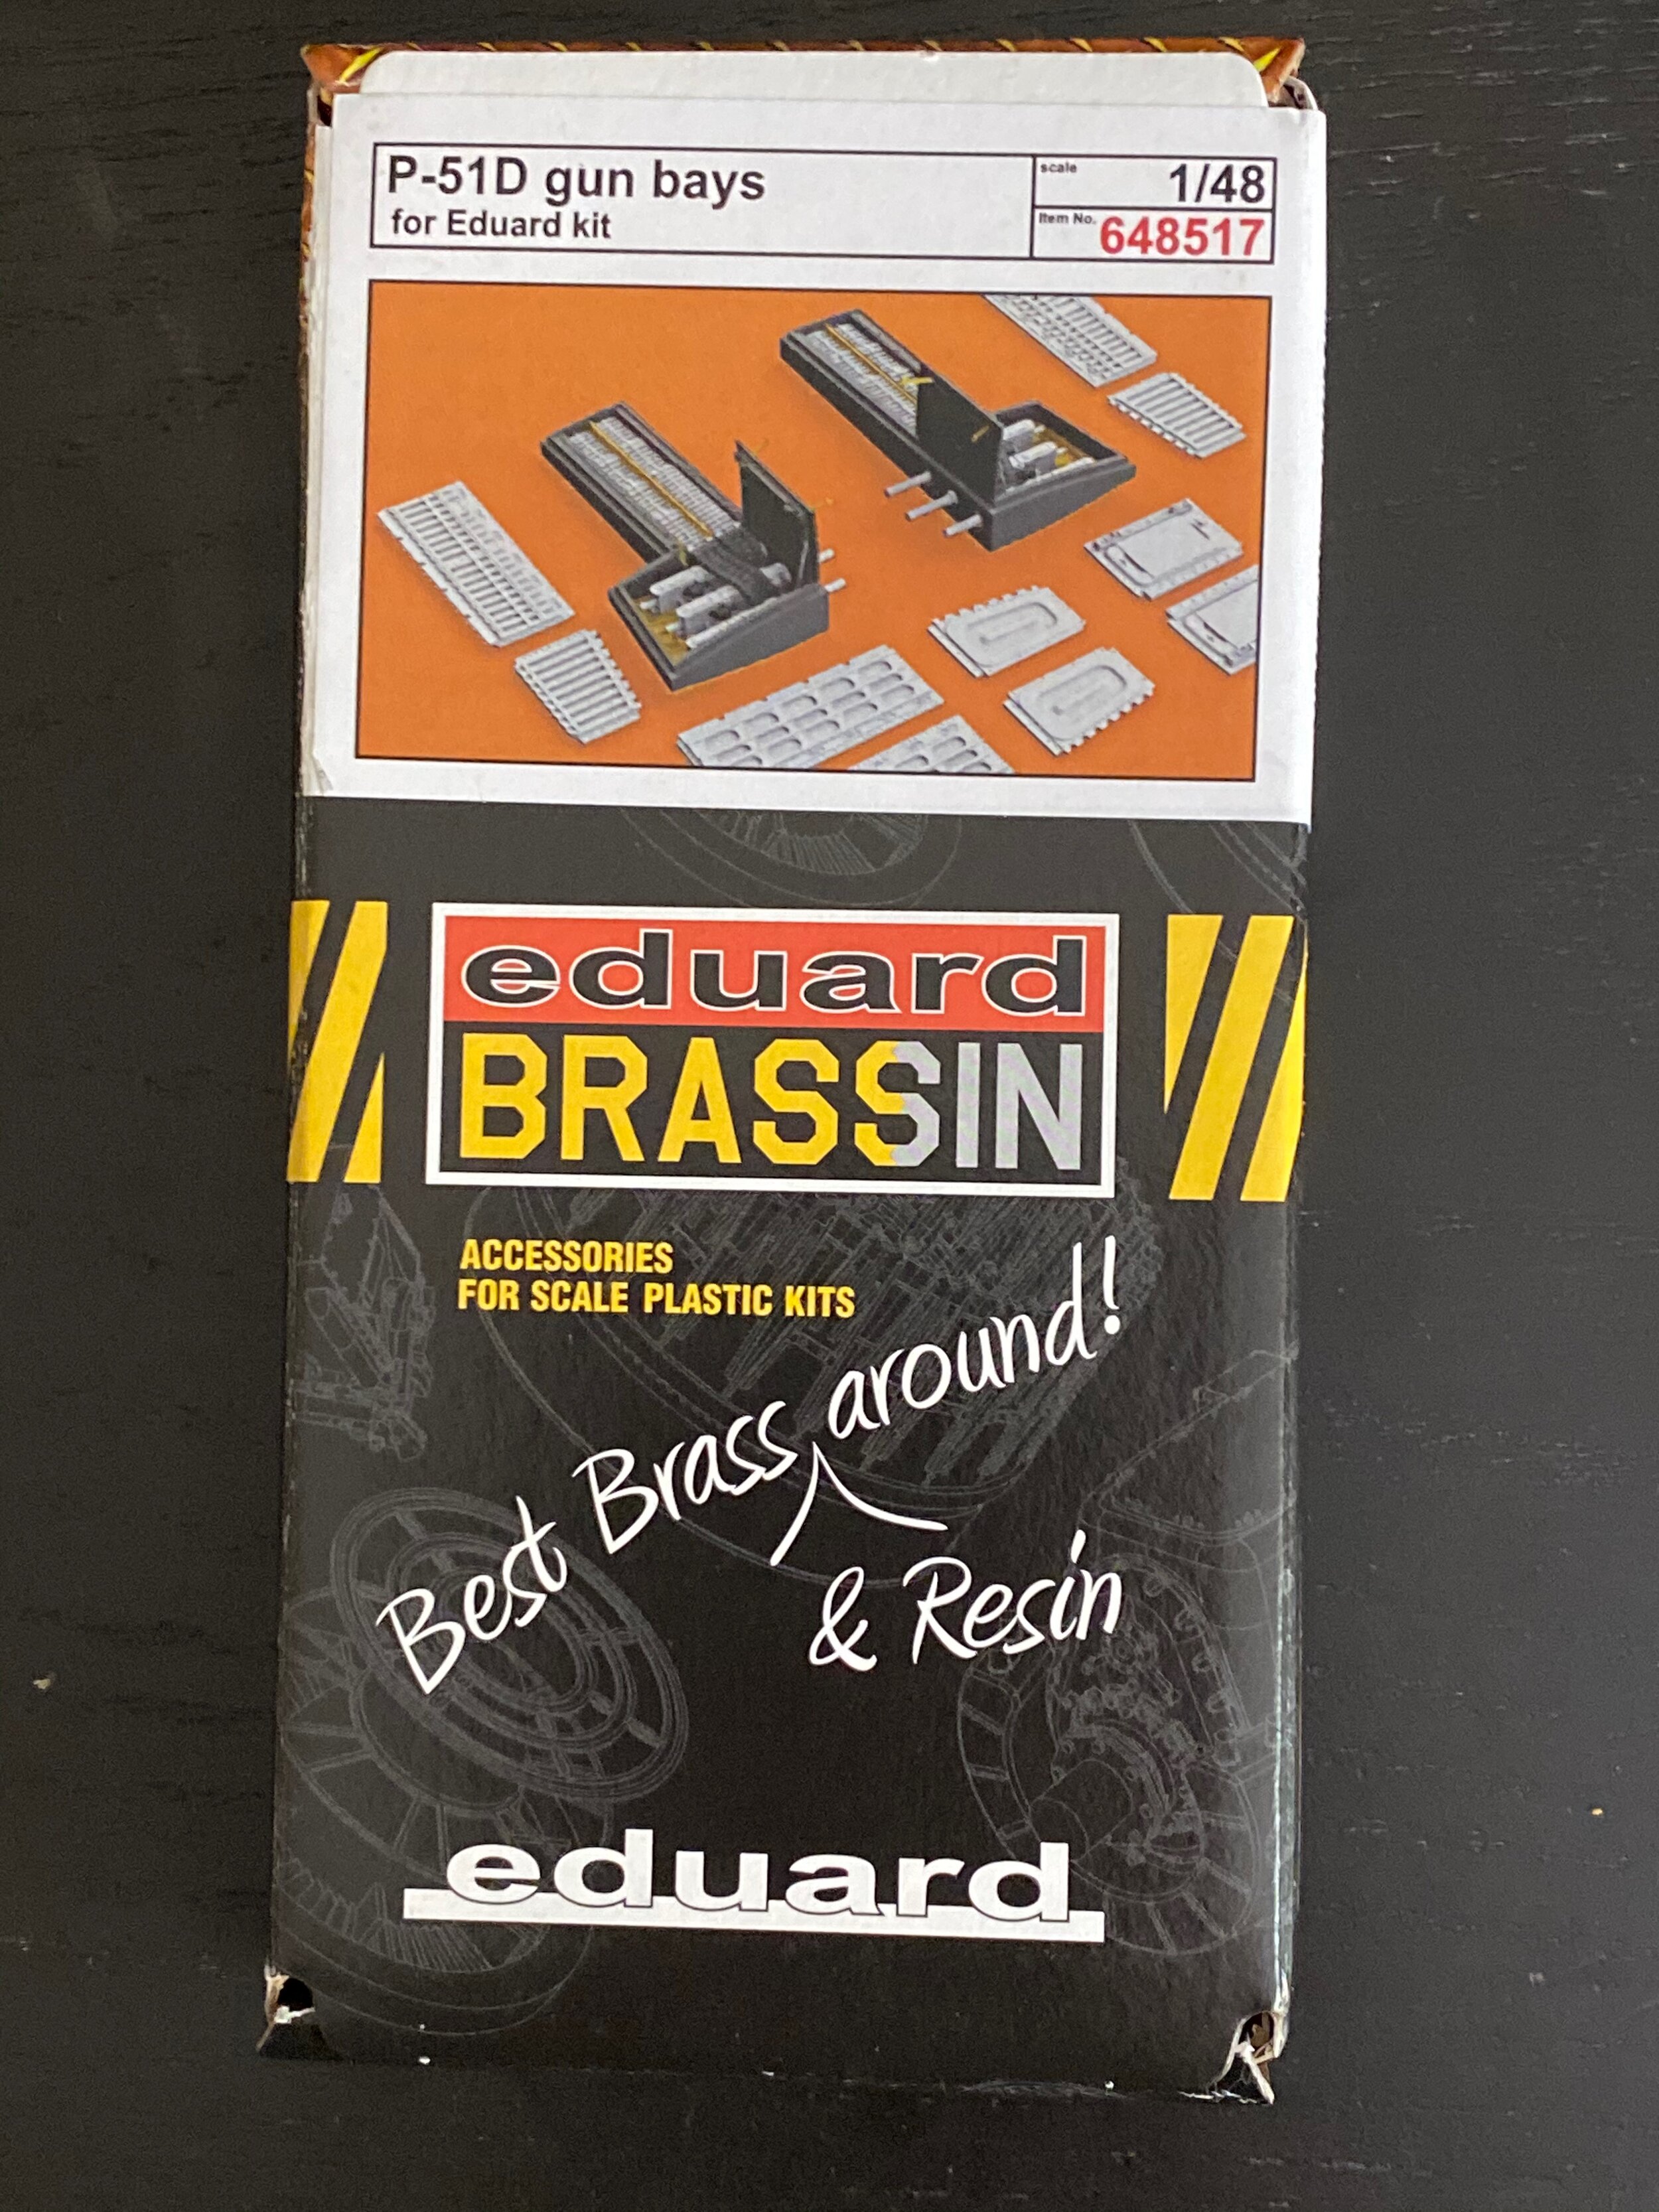 648517 for Eduard Brassin Resin 1/48 Scale P-51D gun bays 